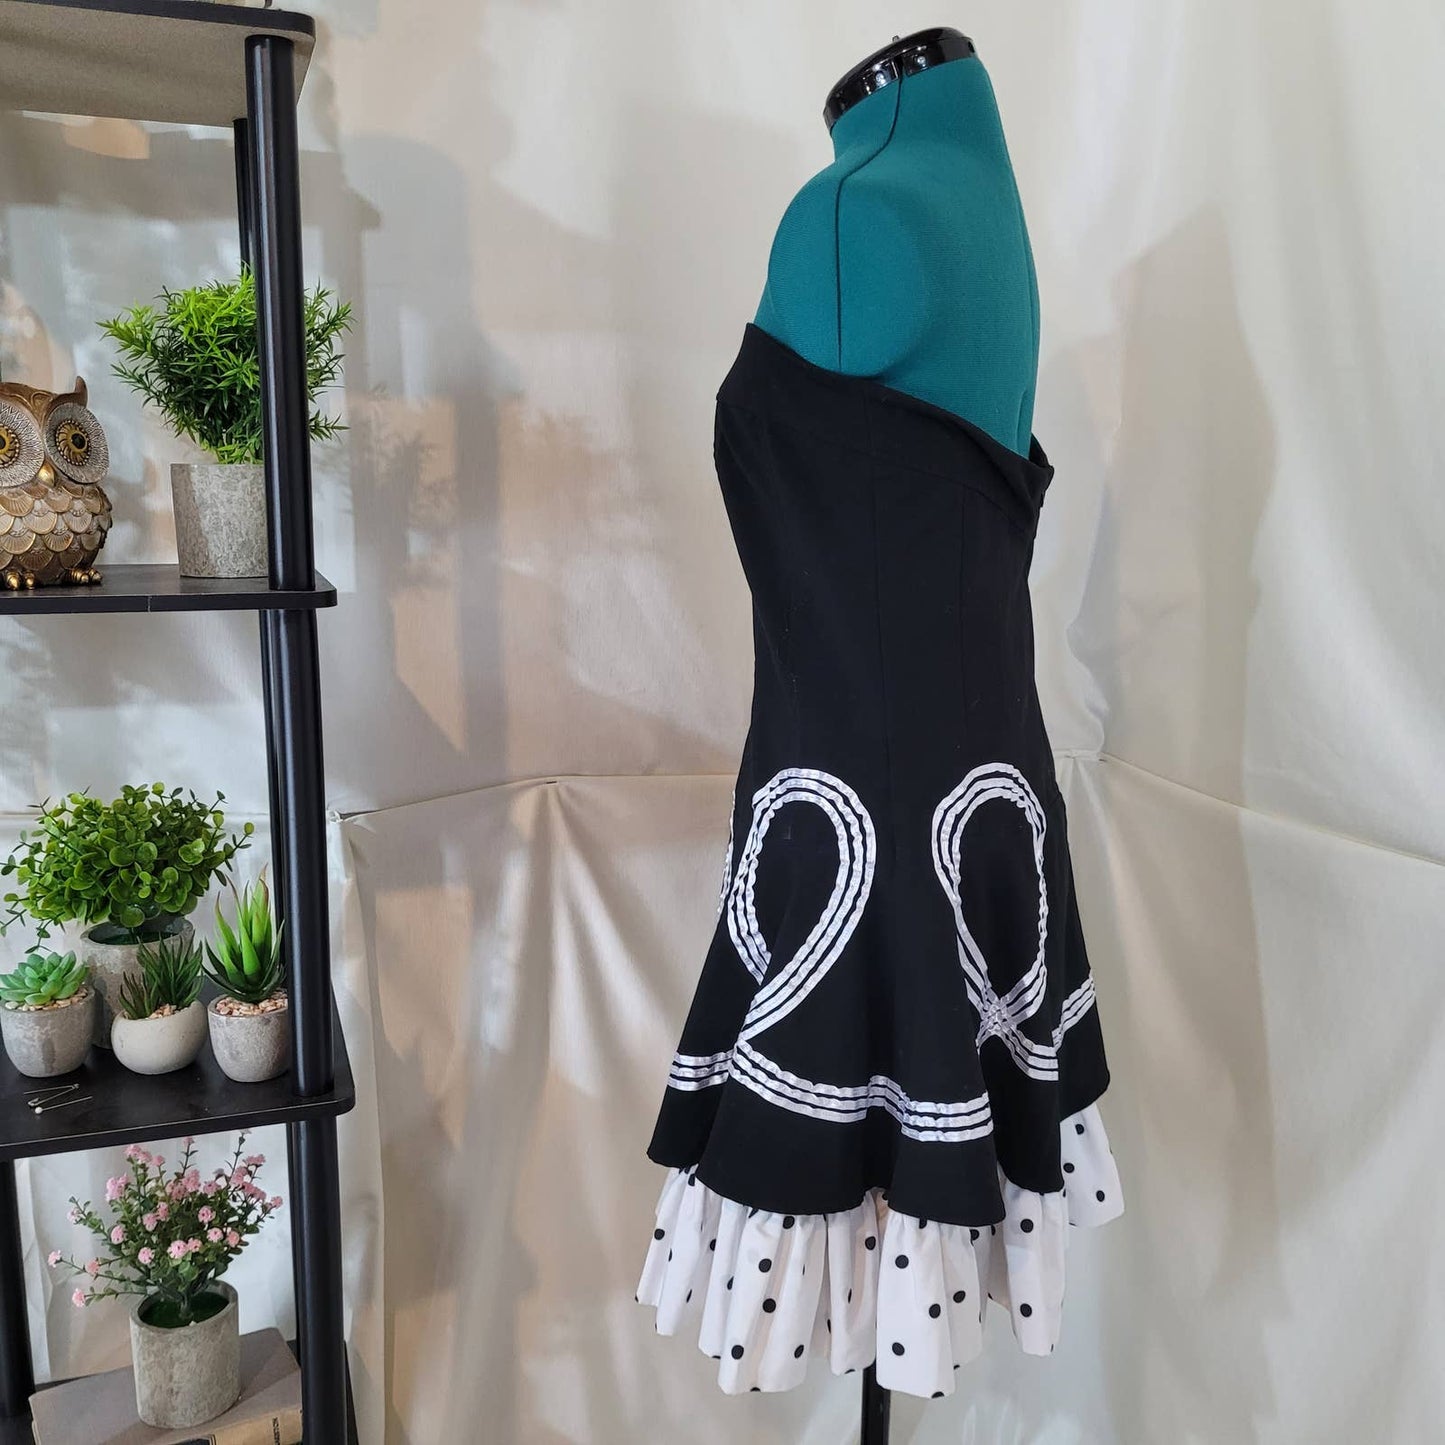 Seduction Fashion Strapless Black Dress with Polka Dot Hem - Size Large